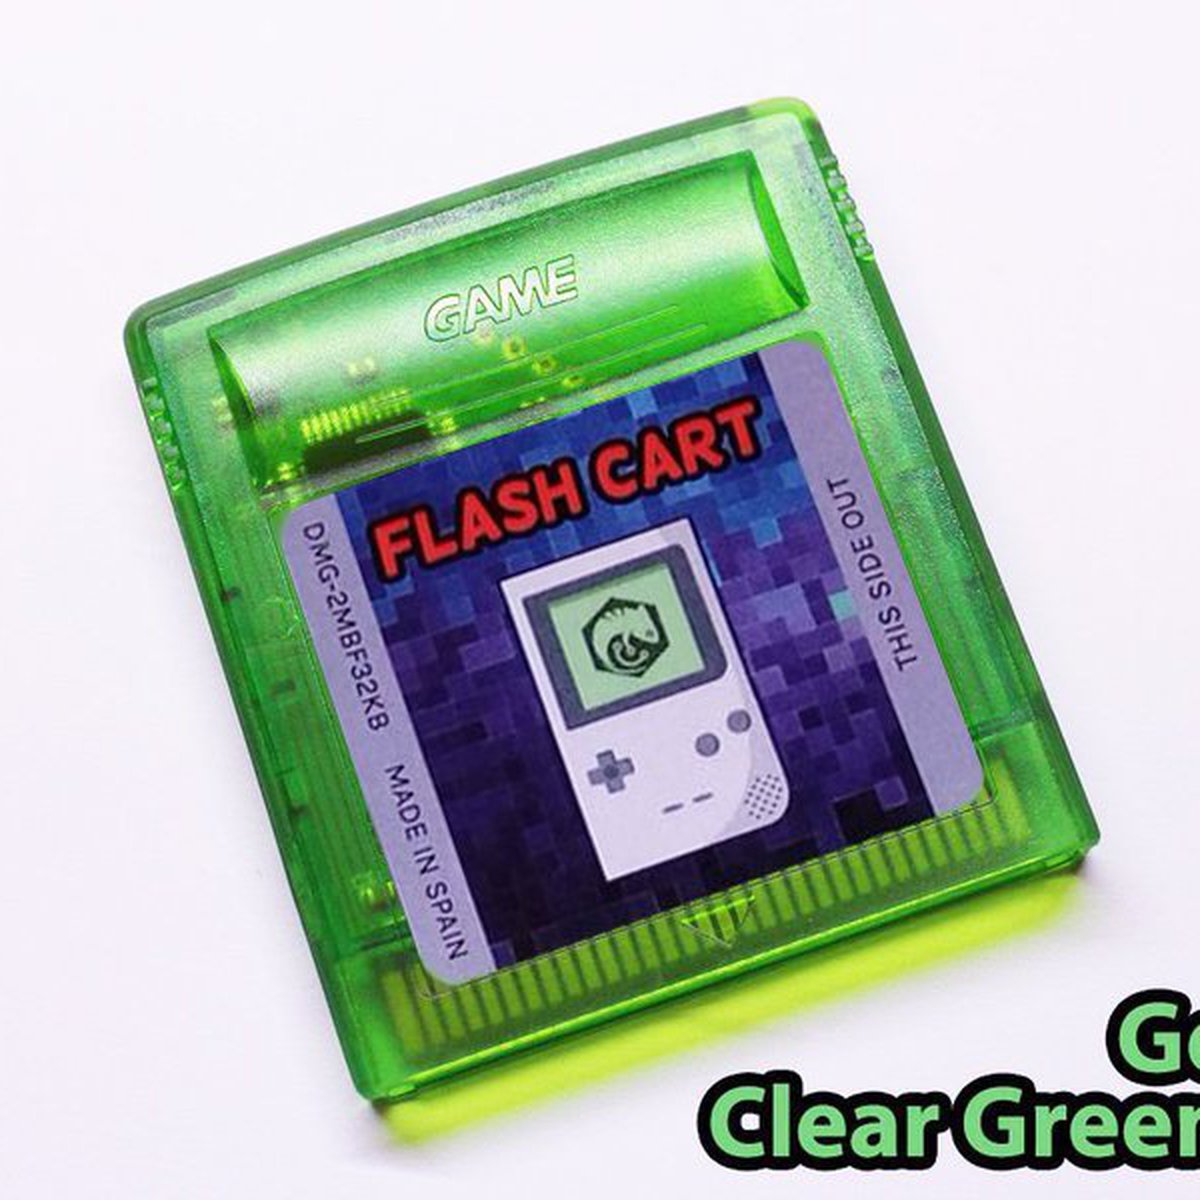 Flash Cartridge ROM 2MB @ FRAM for GameBoy from J.Rodrigo on Tindie